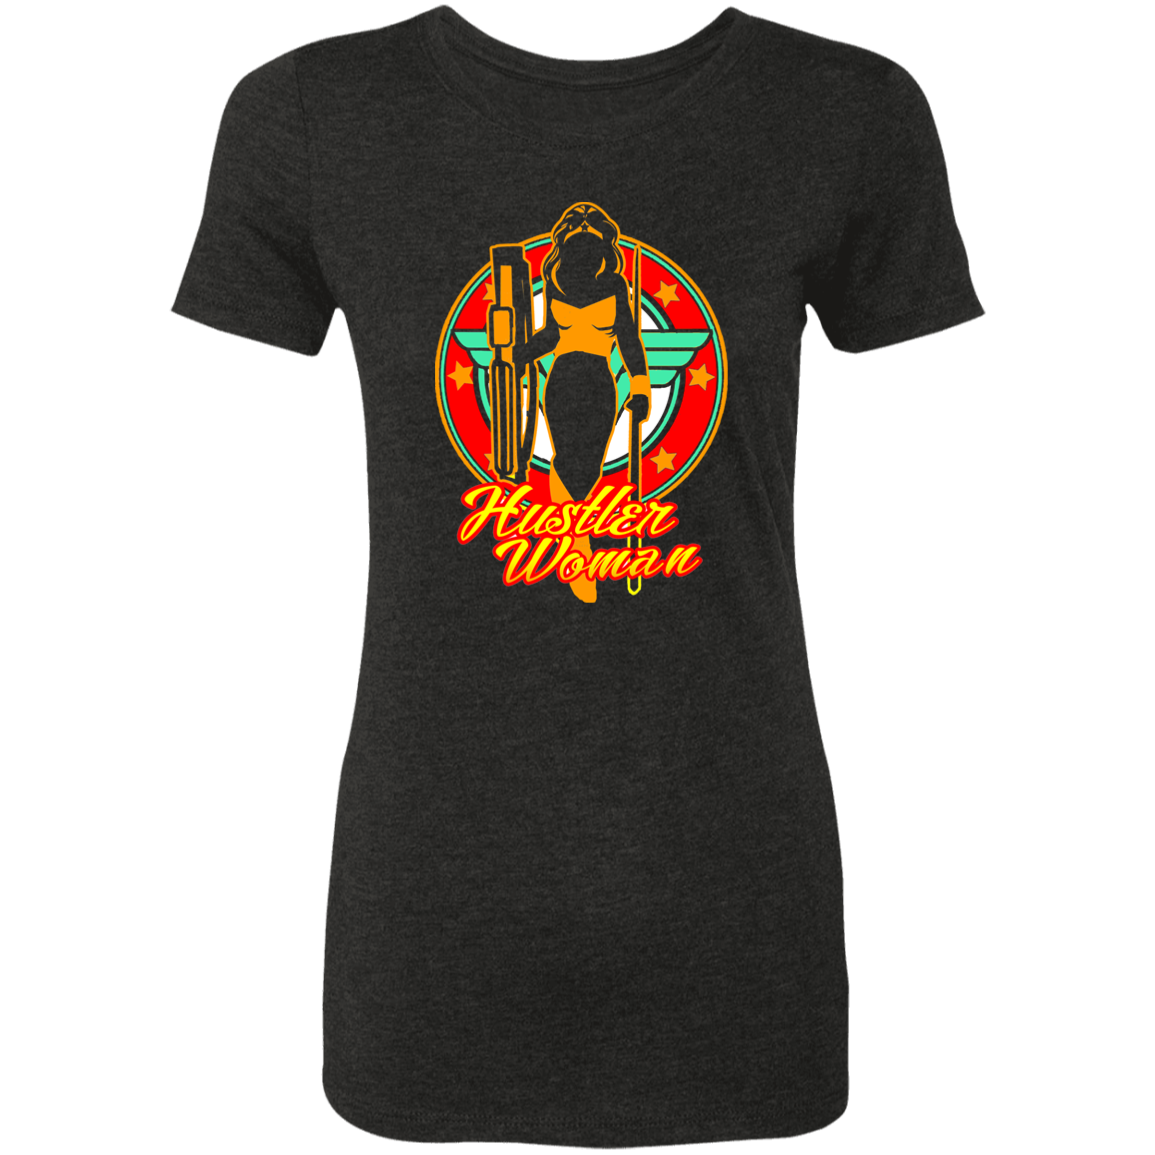 The GHOATS Custom Design #15. Hustler Woman. Ladies' Triblend T-Shirt